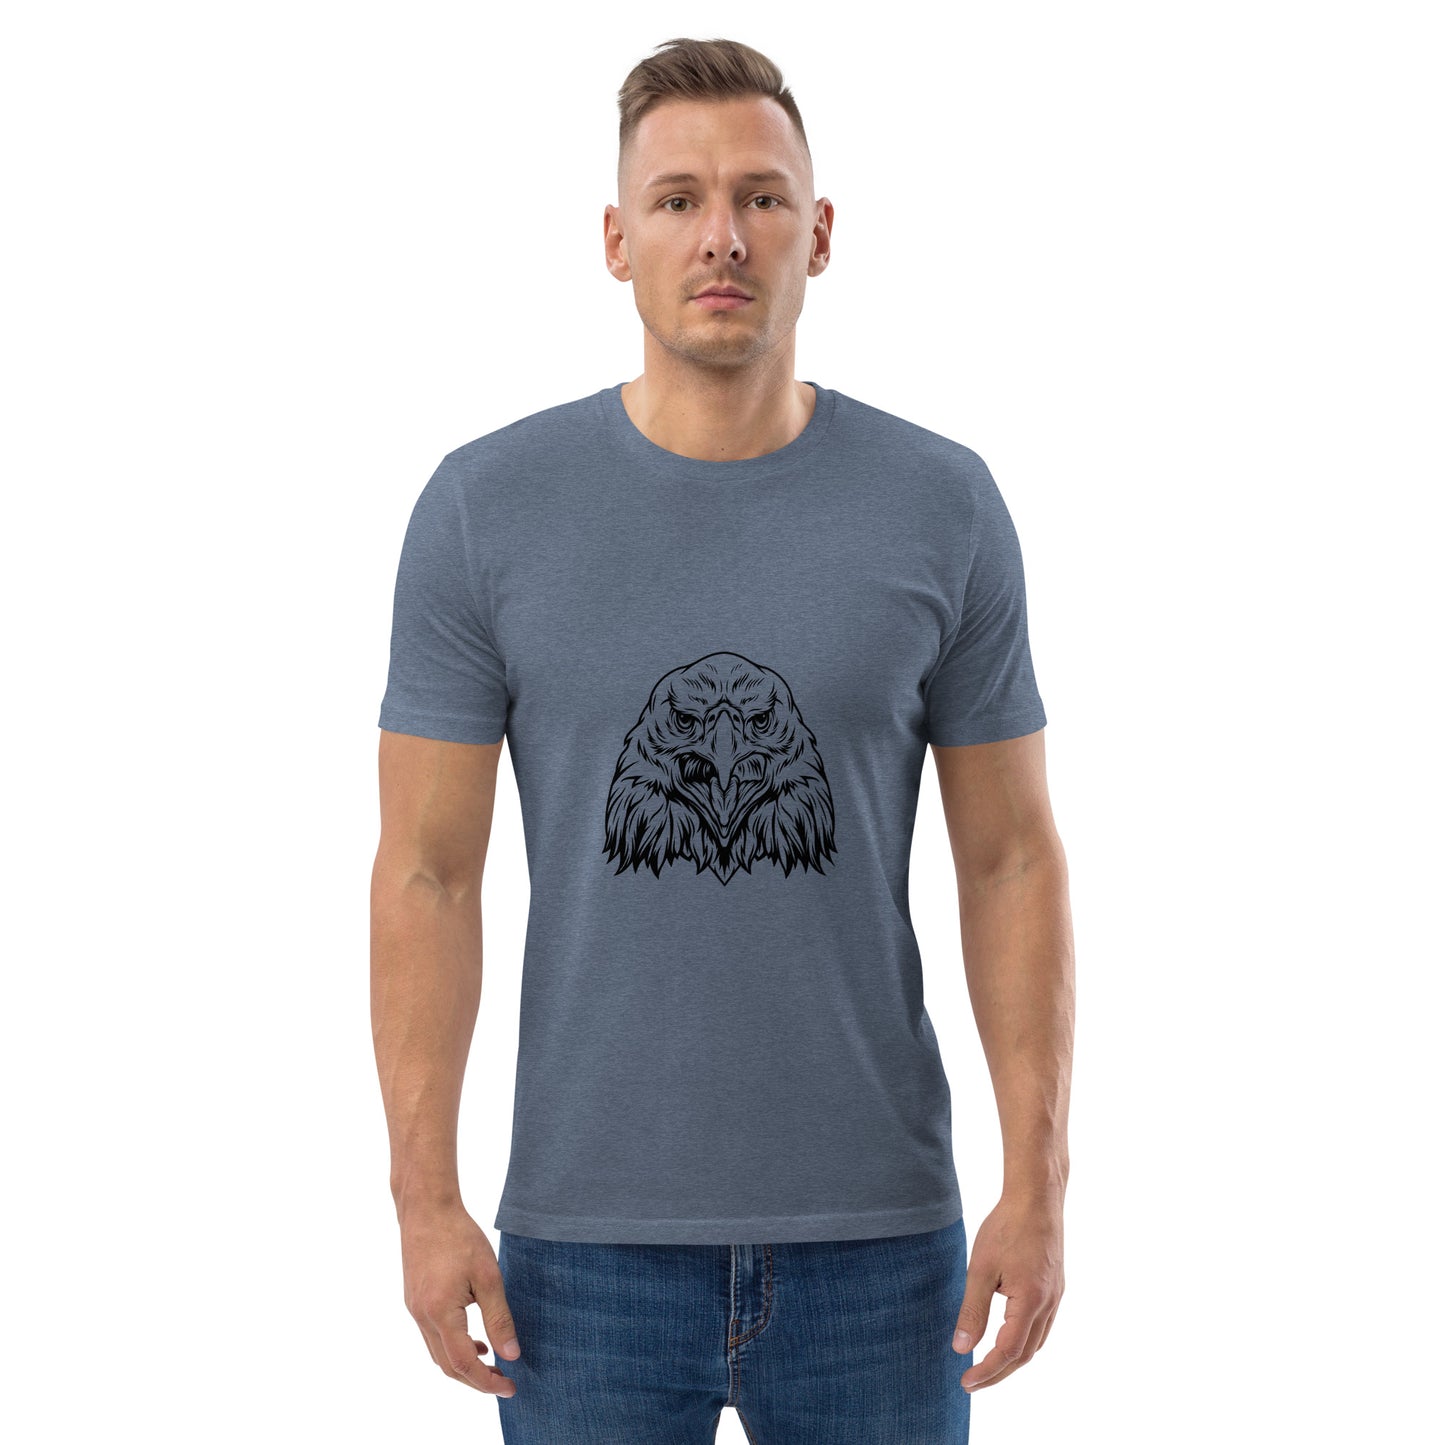 Unisex organic cotton t-shirt - Eagle Print